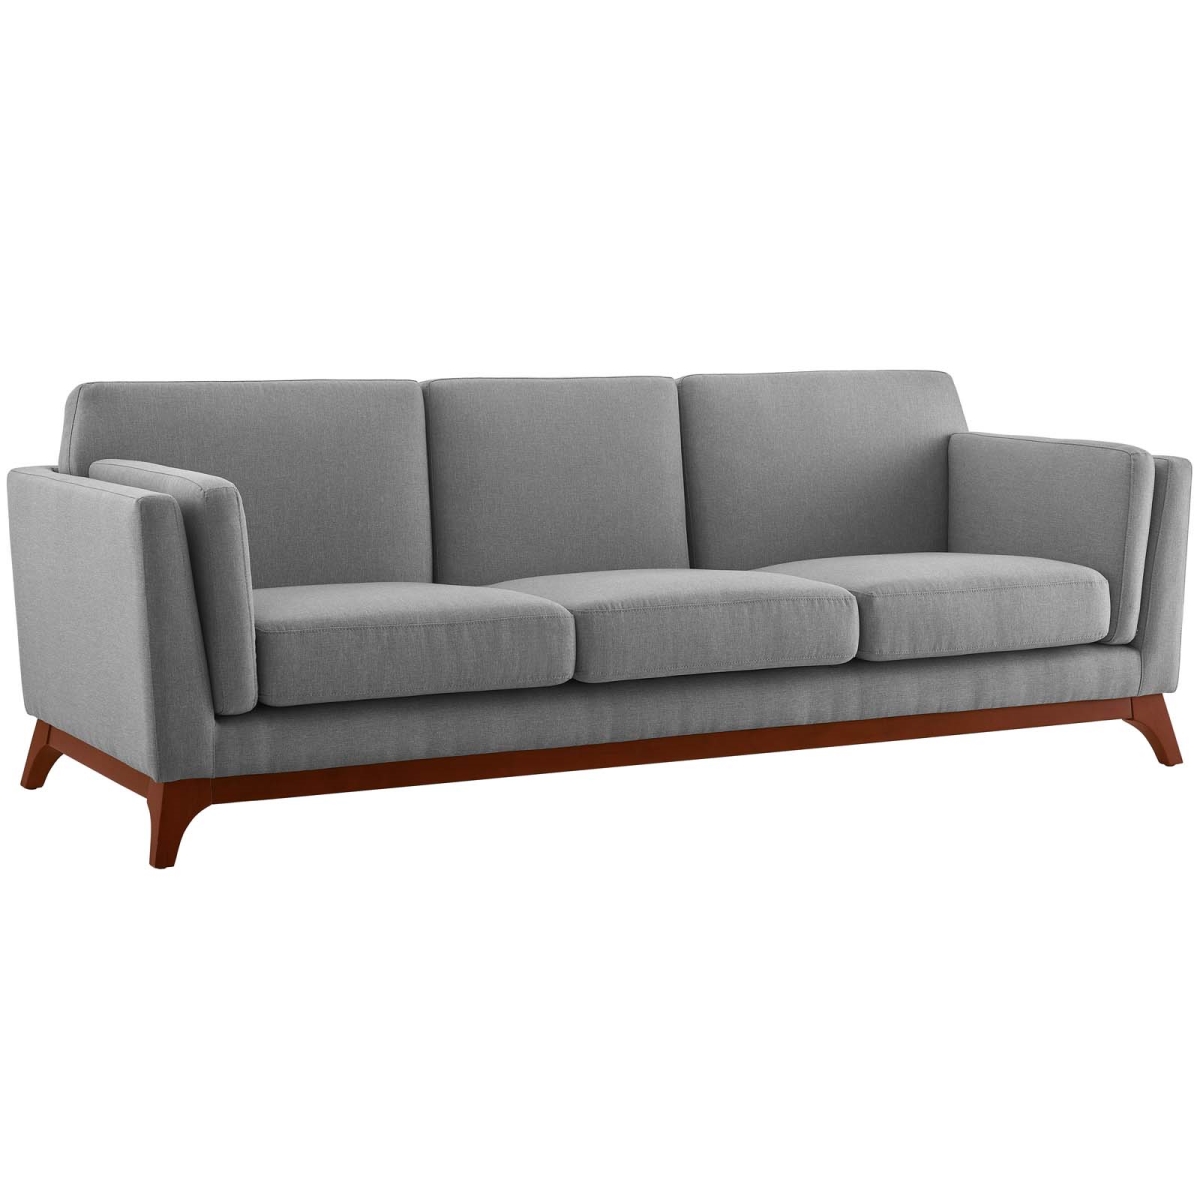 Eei-3062-lgr Chance Upholstered Fabric Sofa - Light Gray, 30 X 35 X 83.5 In.